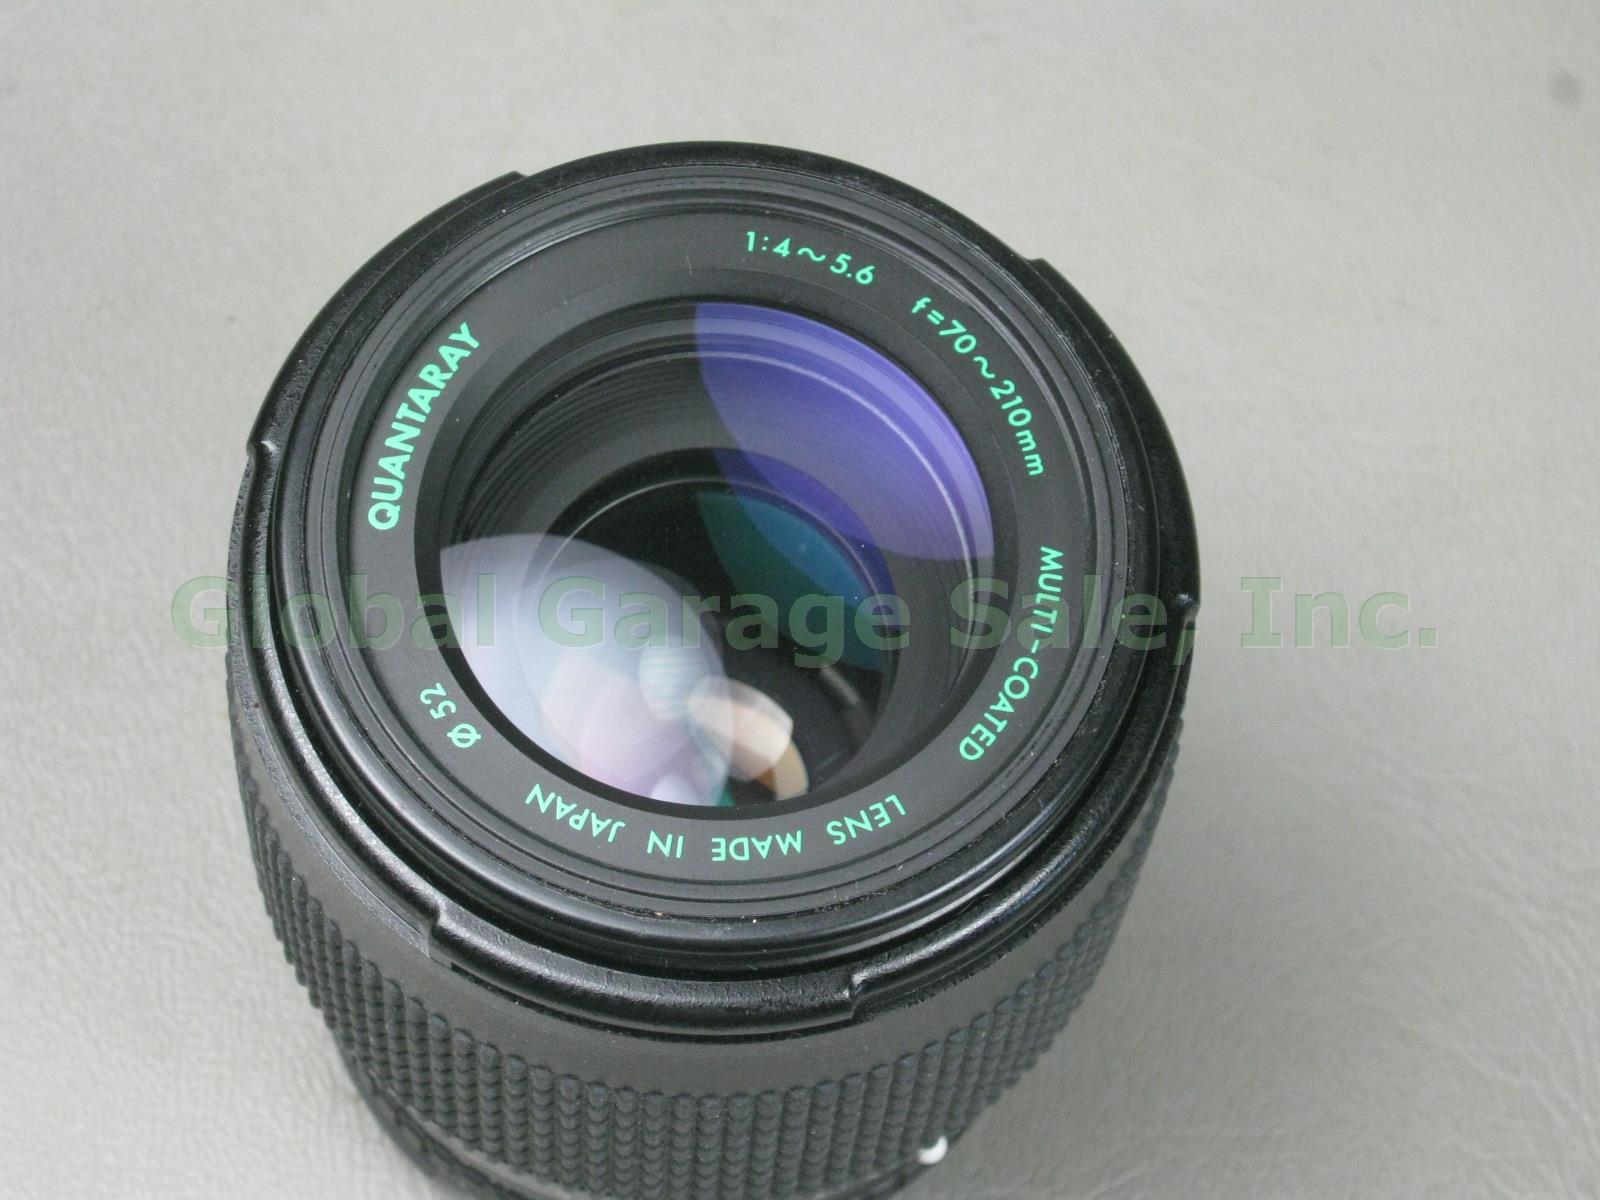 Nikkormat EL + Nikkor-Q 200mm 1:4 Zoom Lens Nikon FB5 Case Kiron 35-135mm Macro 18